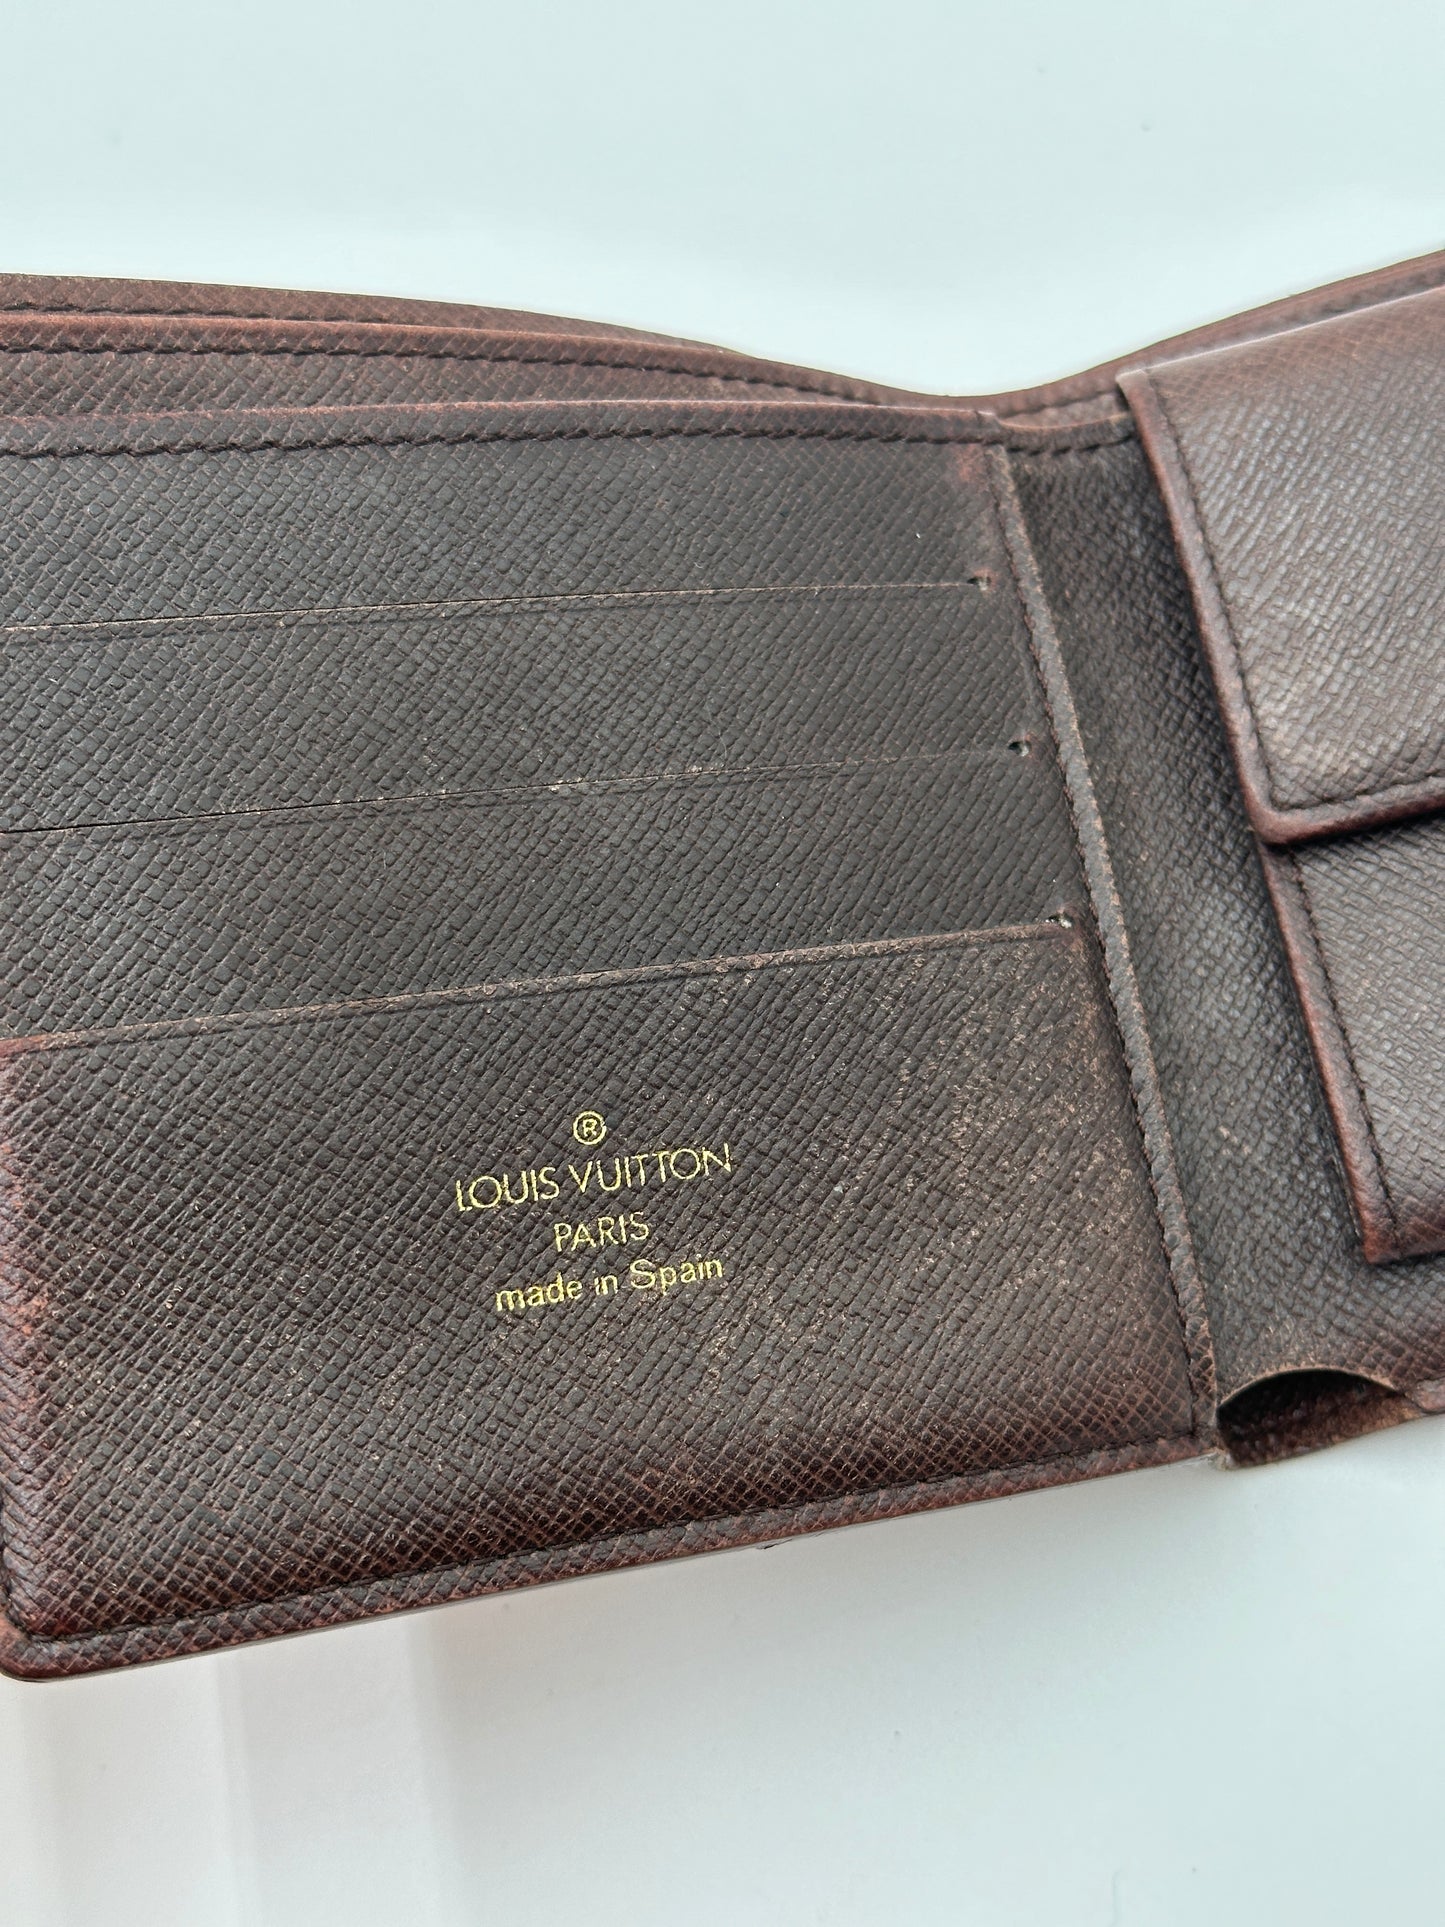 Authentic Louis Vuitton Damier Ebene Mens Bifold Wallet Centennial Edition